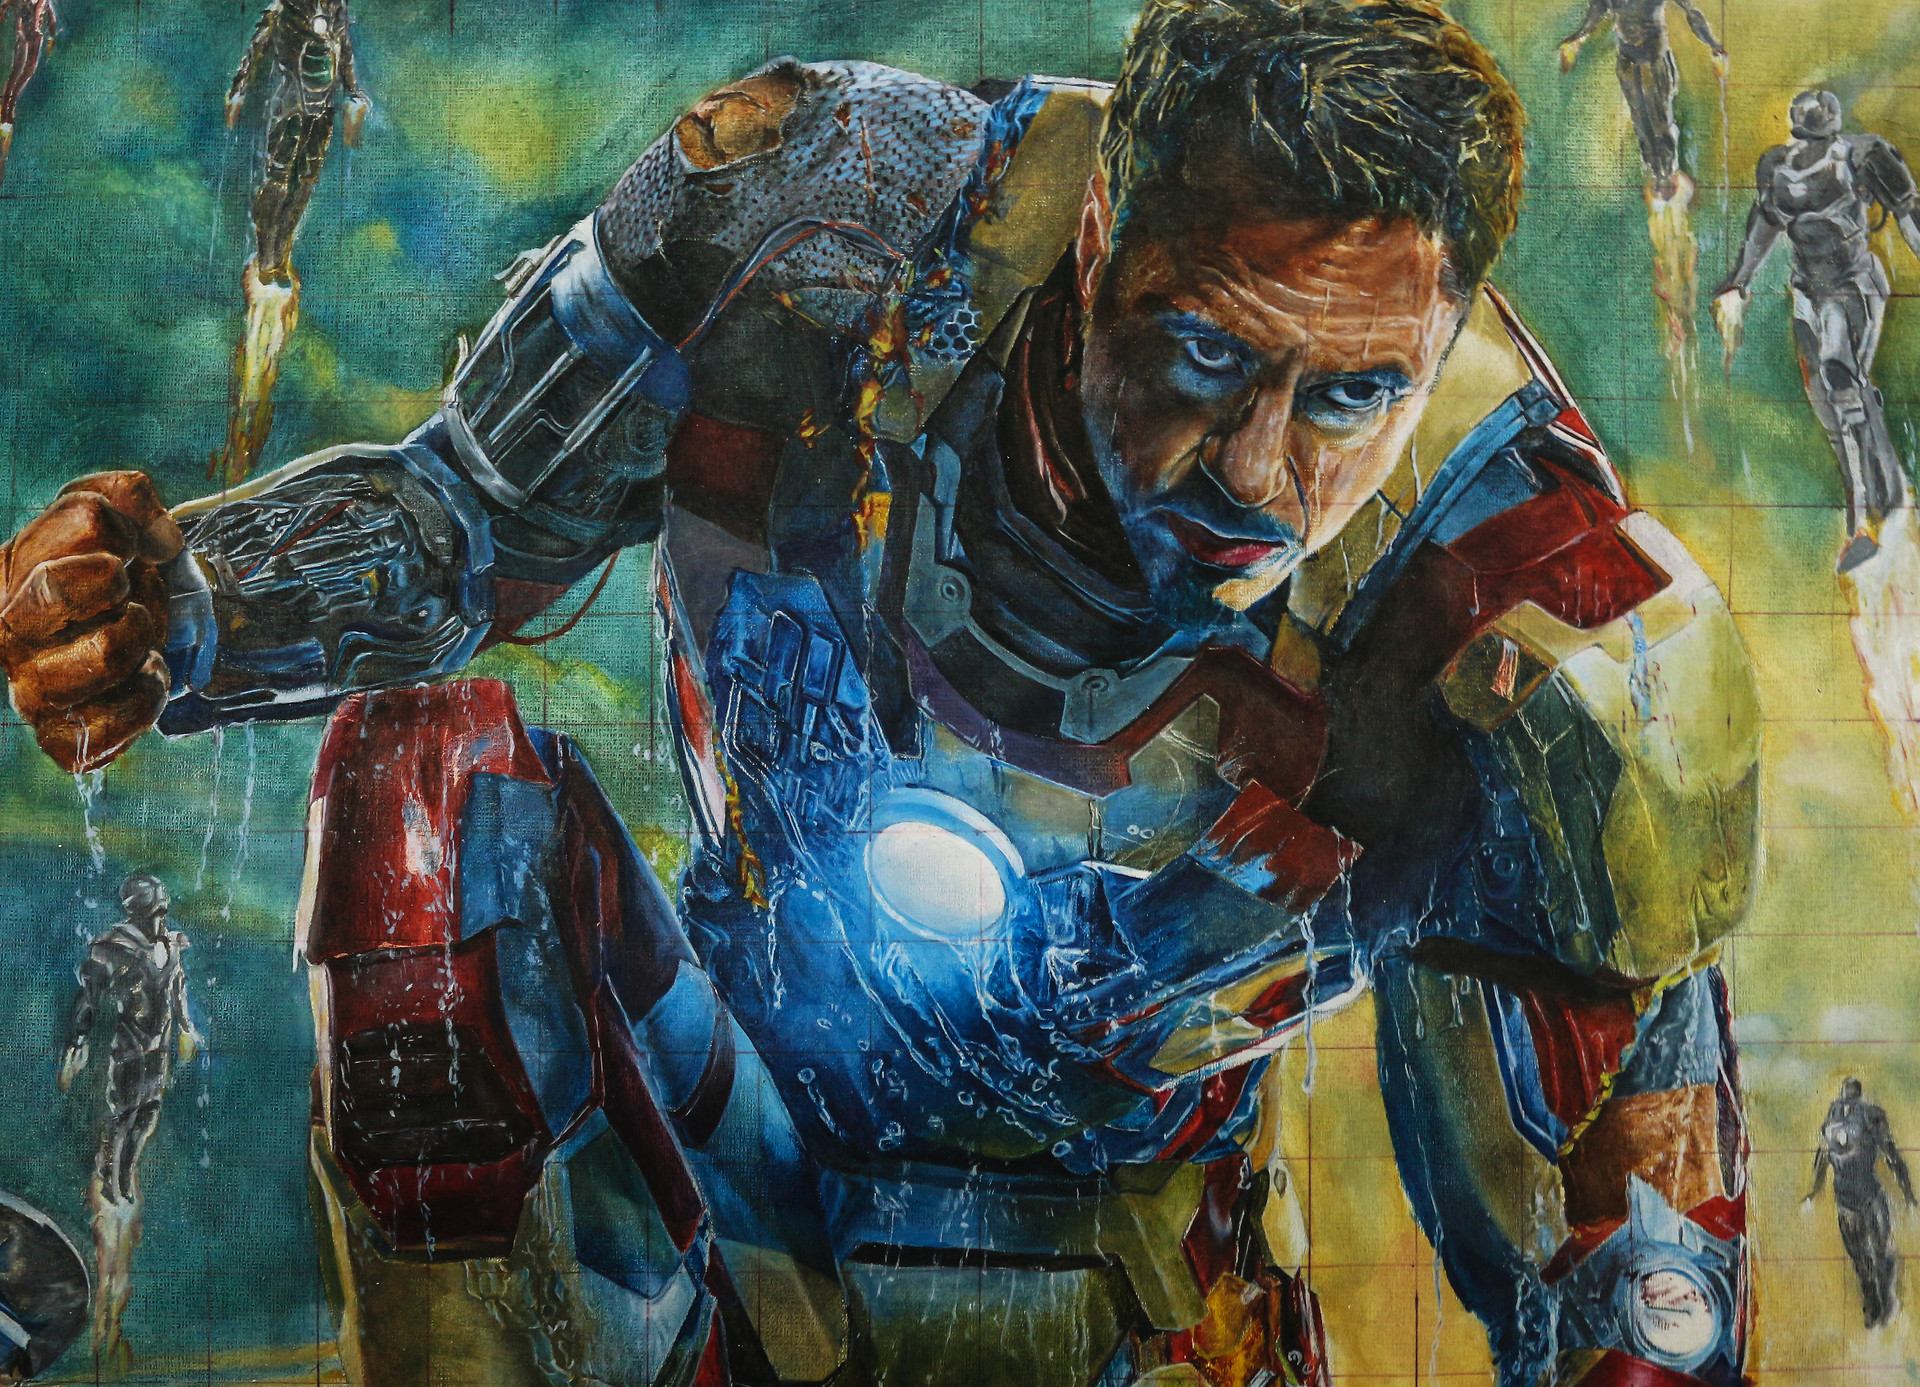 How to Draw Iron Man | Marvel